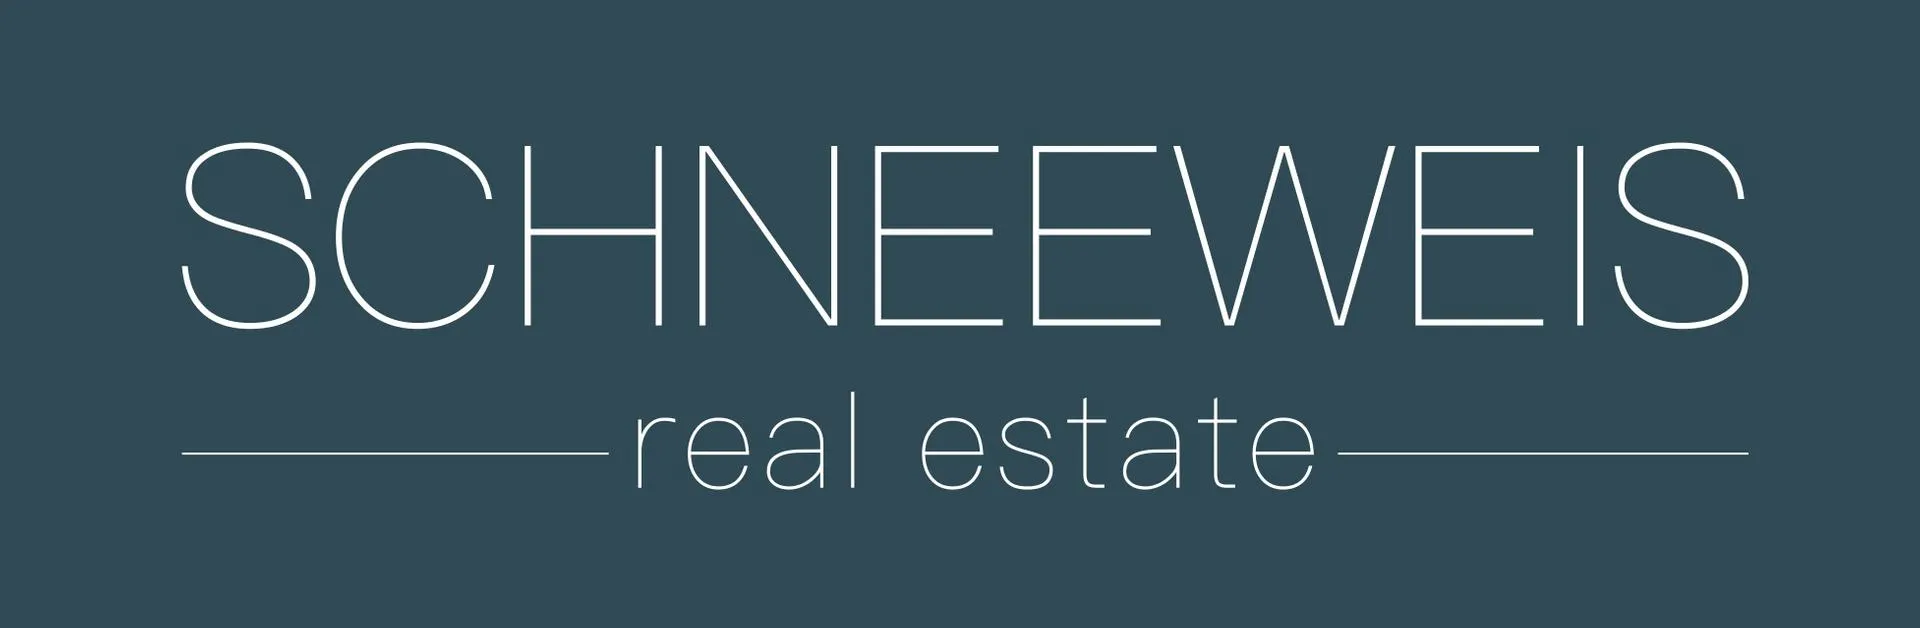 Makler SCHNEEWEIS real estate logo